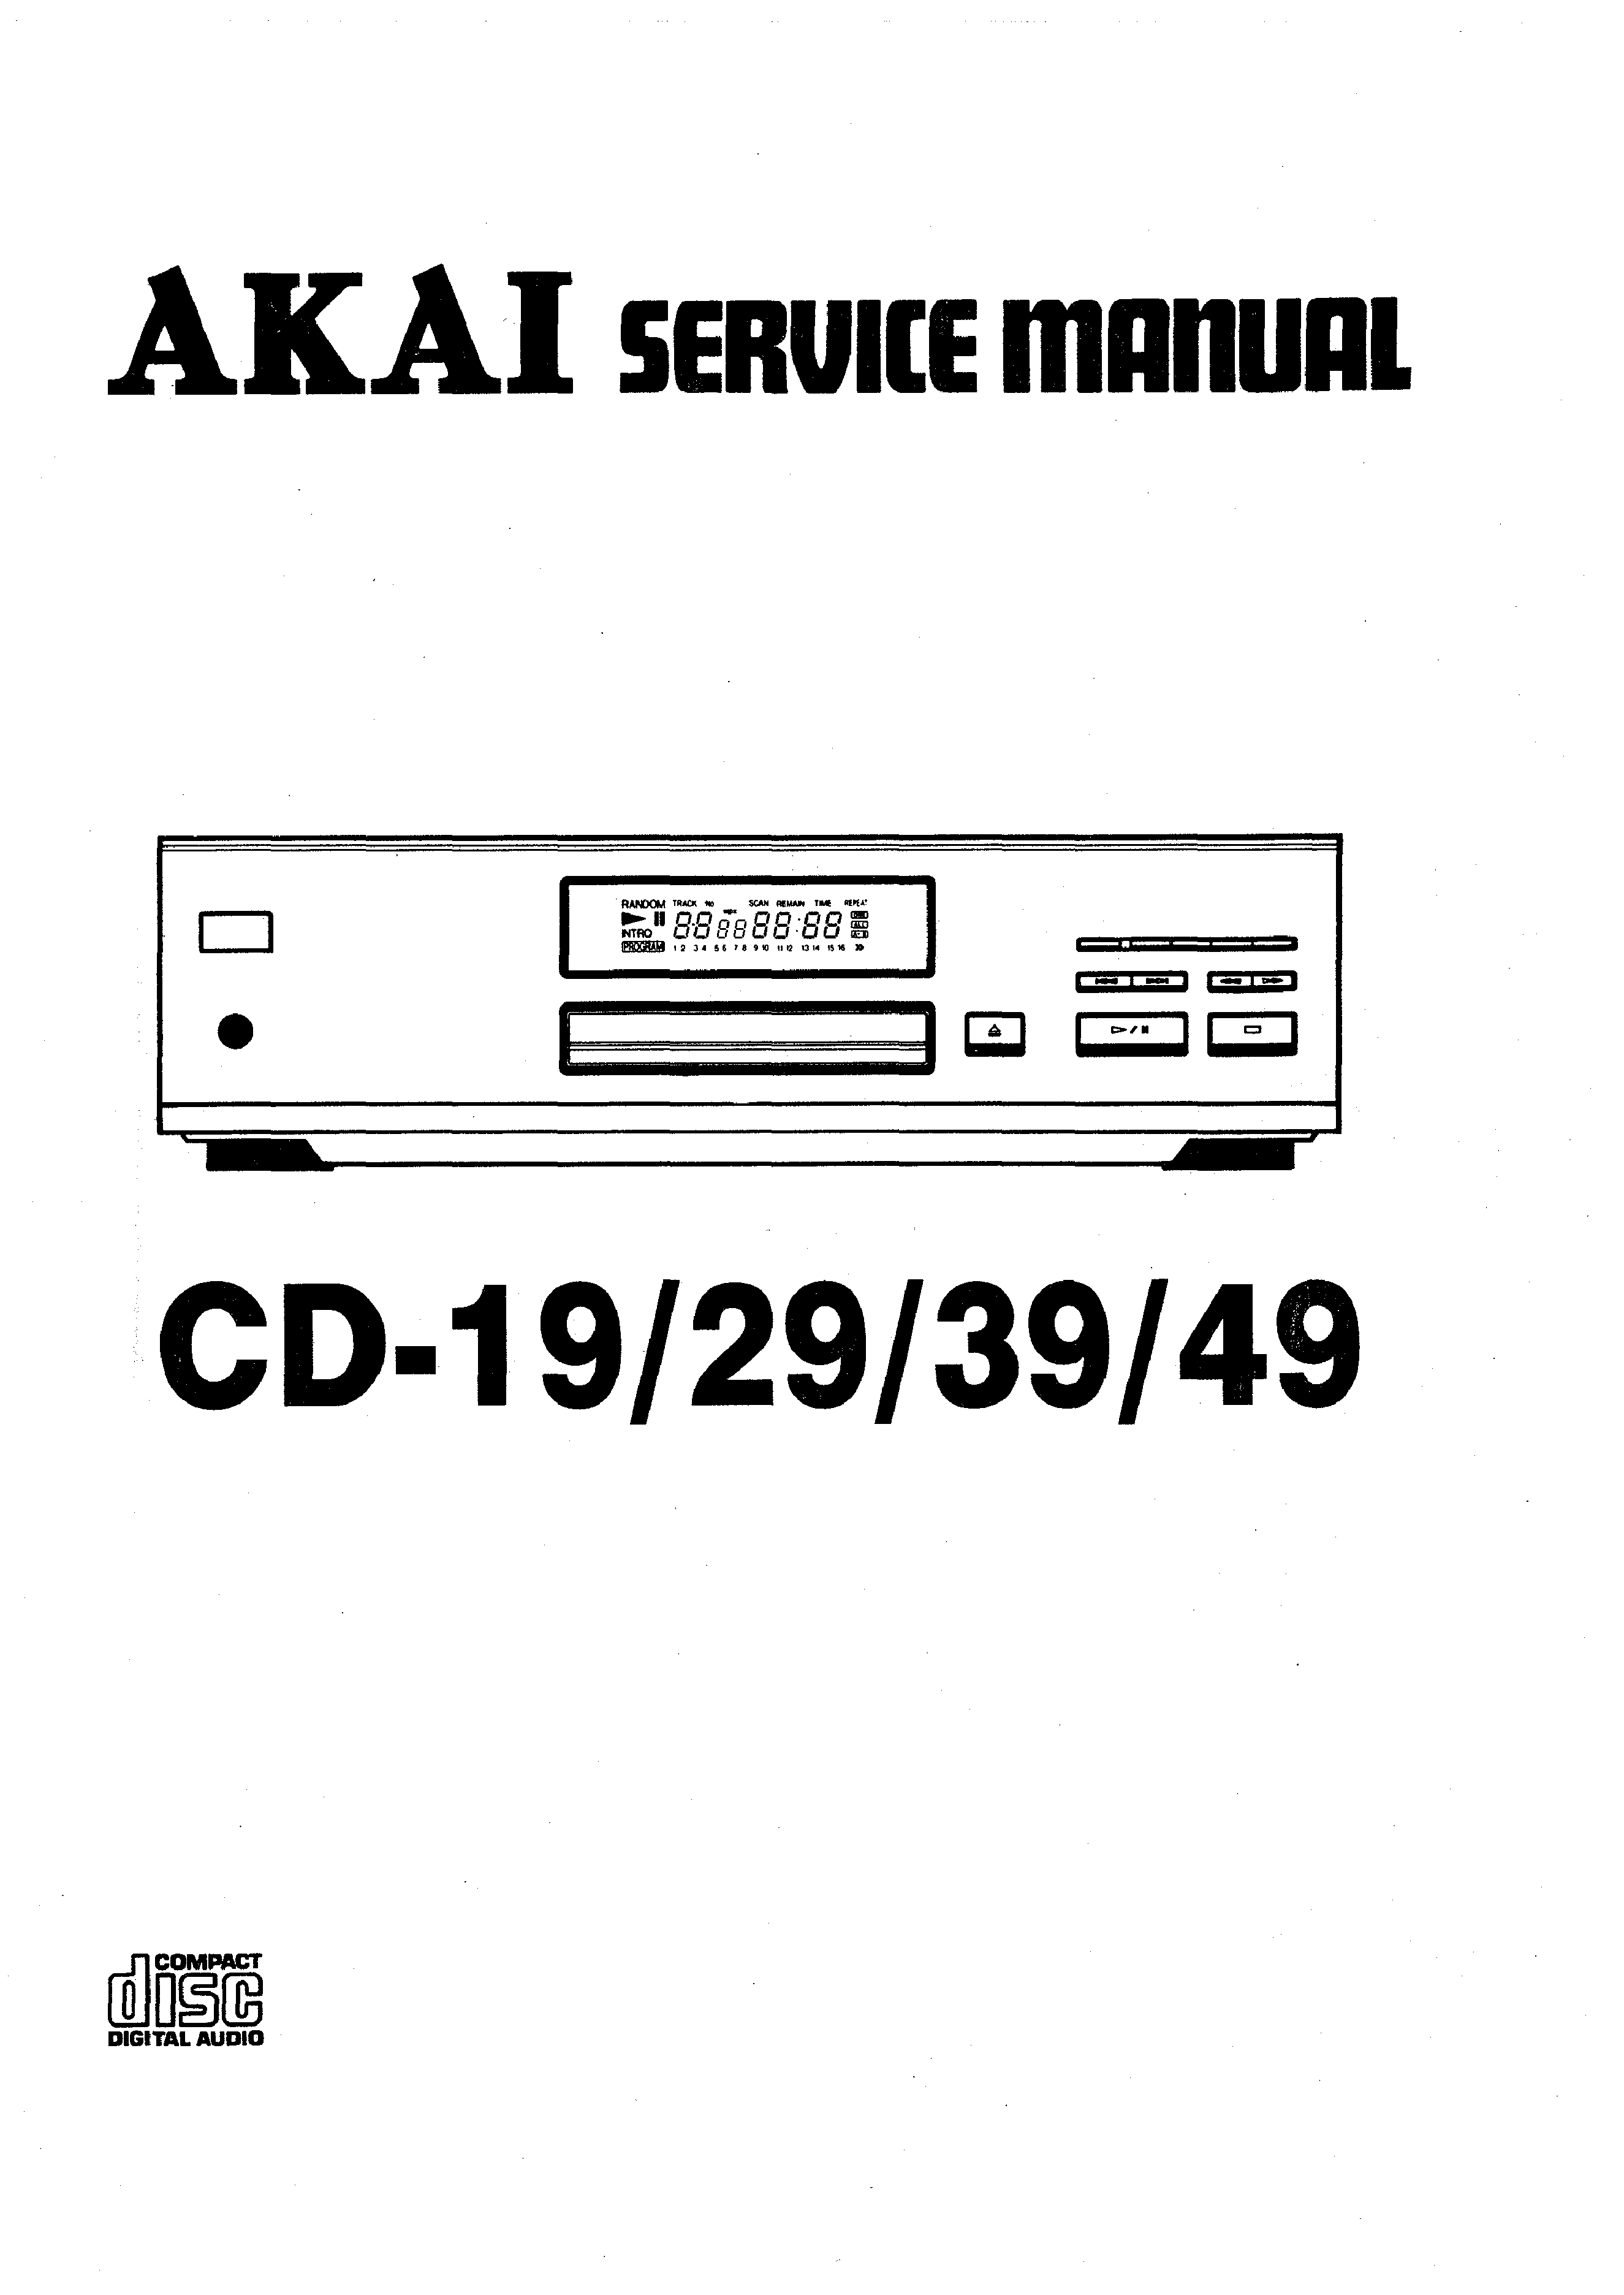 ORIGINALI service manual AKAI cd-m839 